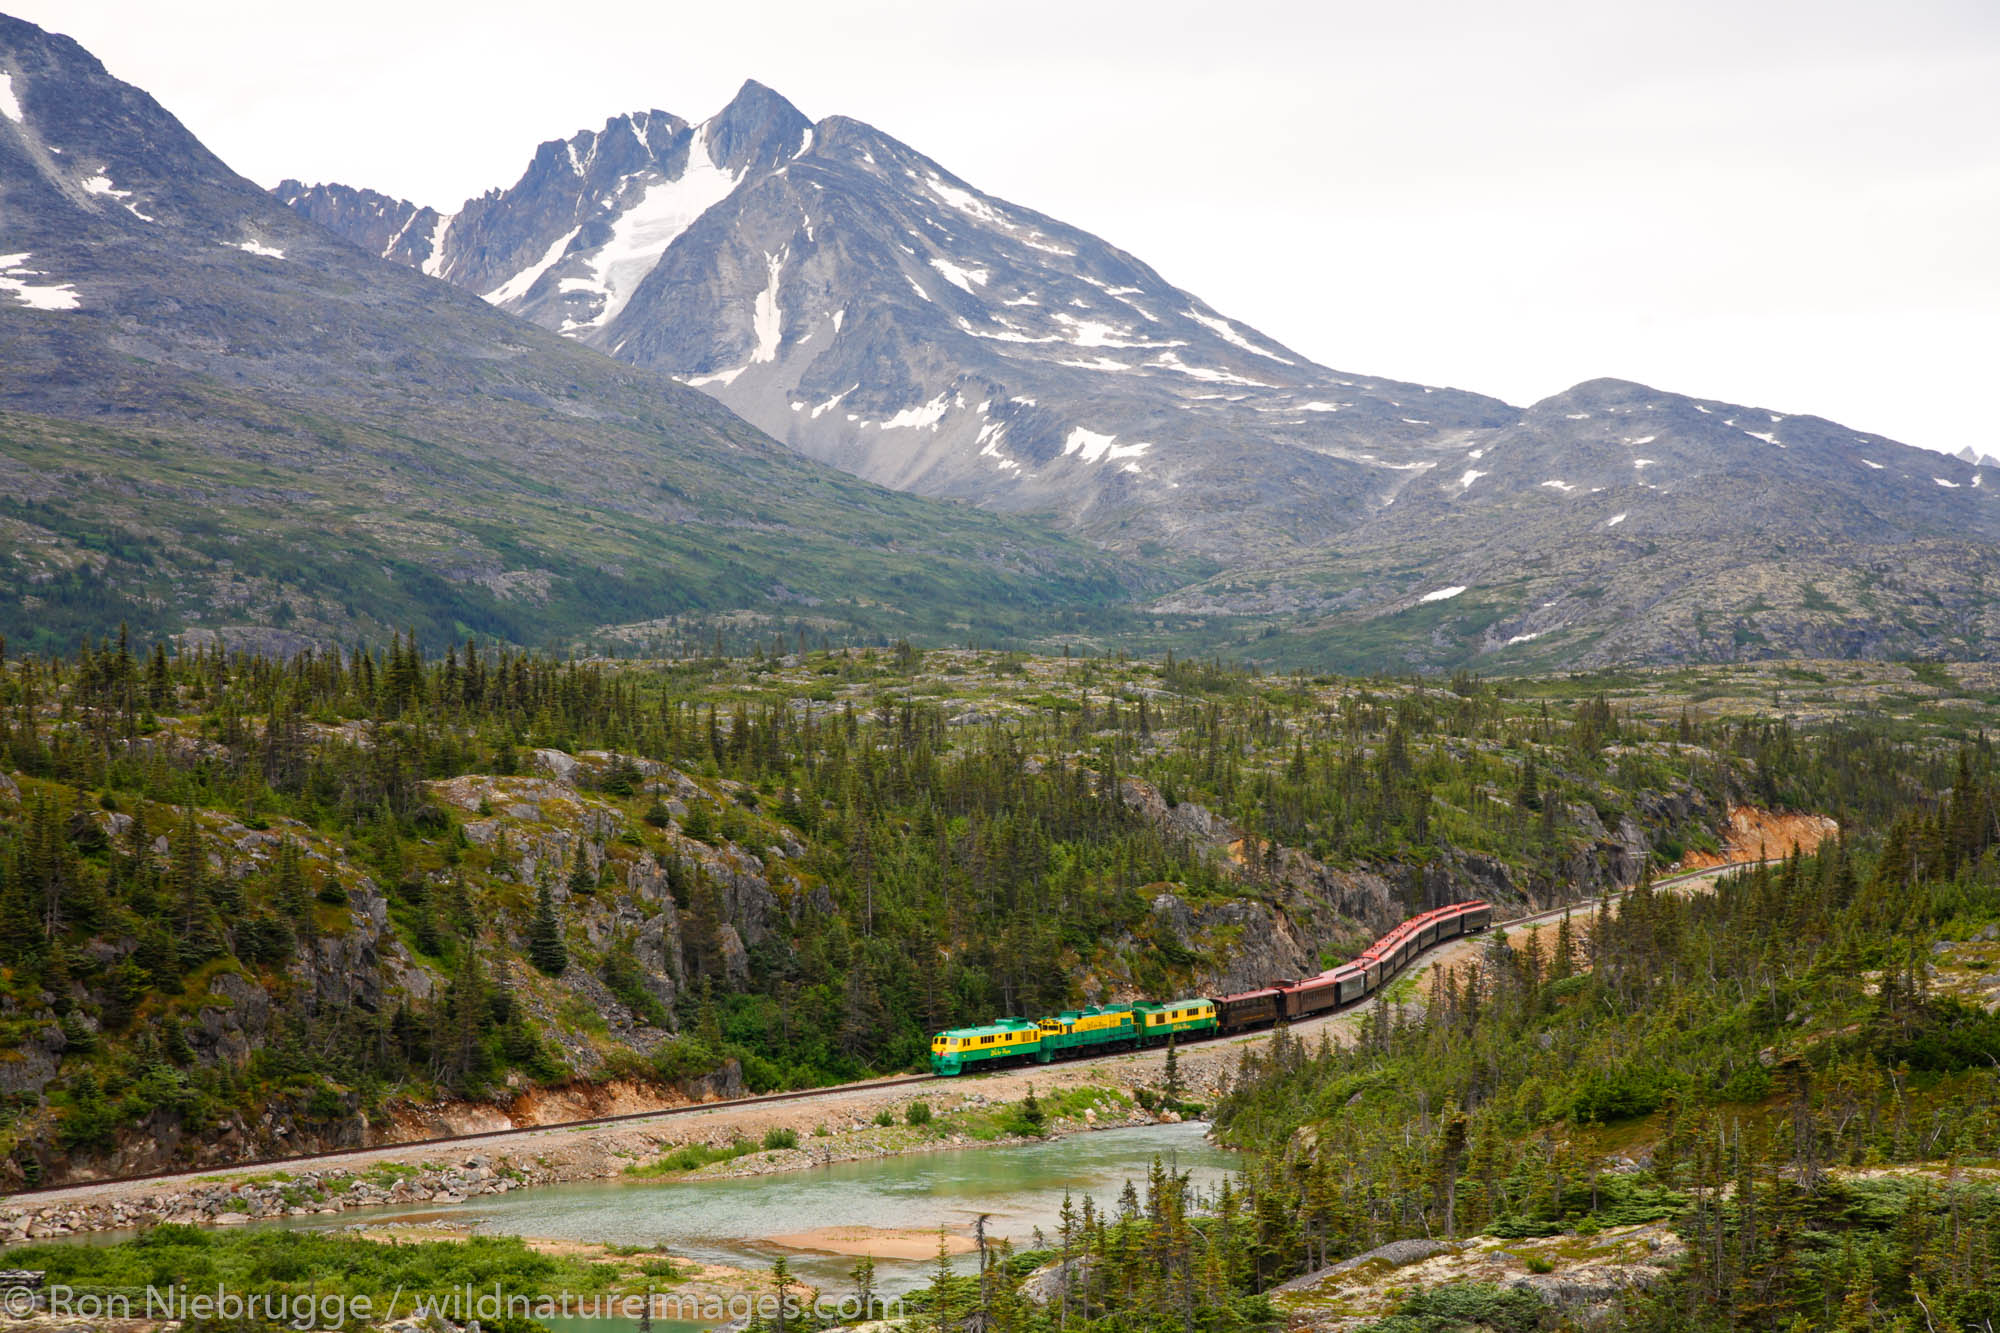 The White Pass Yukon Route Railroad passes through White Pass British Columbia, Canada, from Skagway, Alaska.